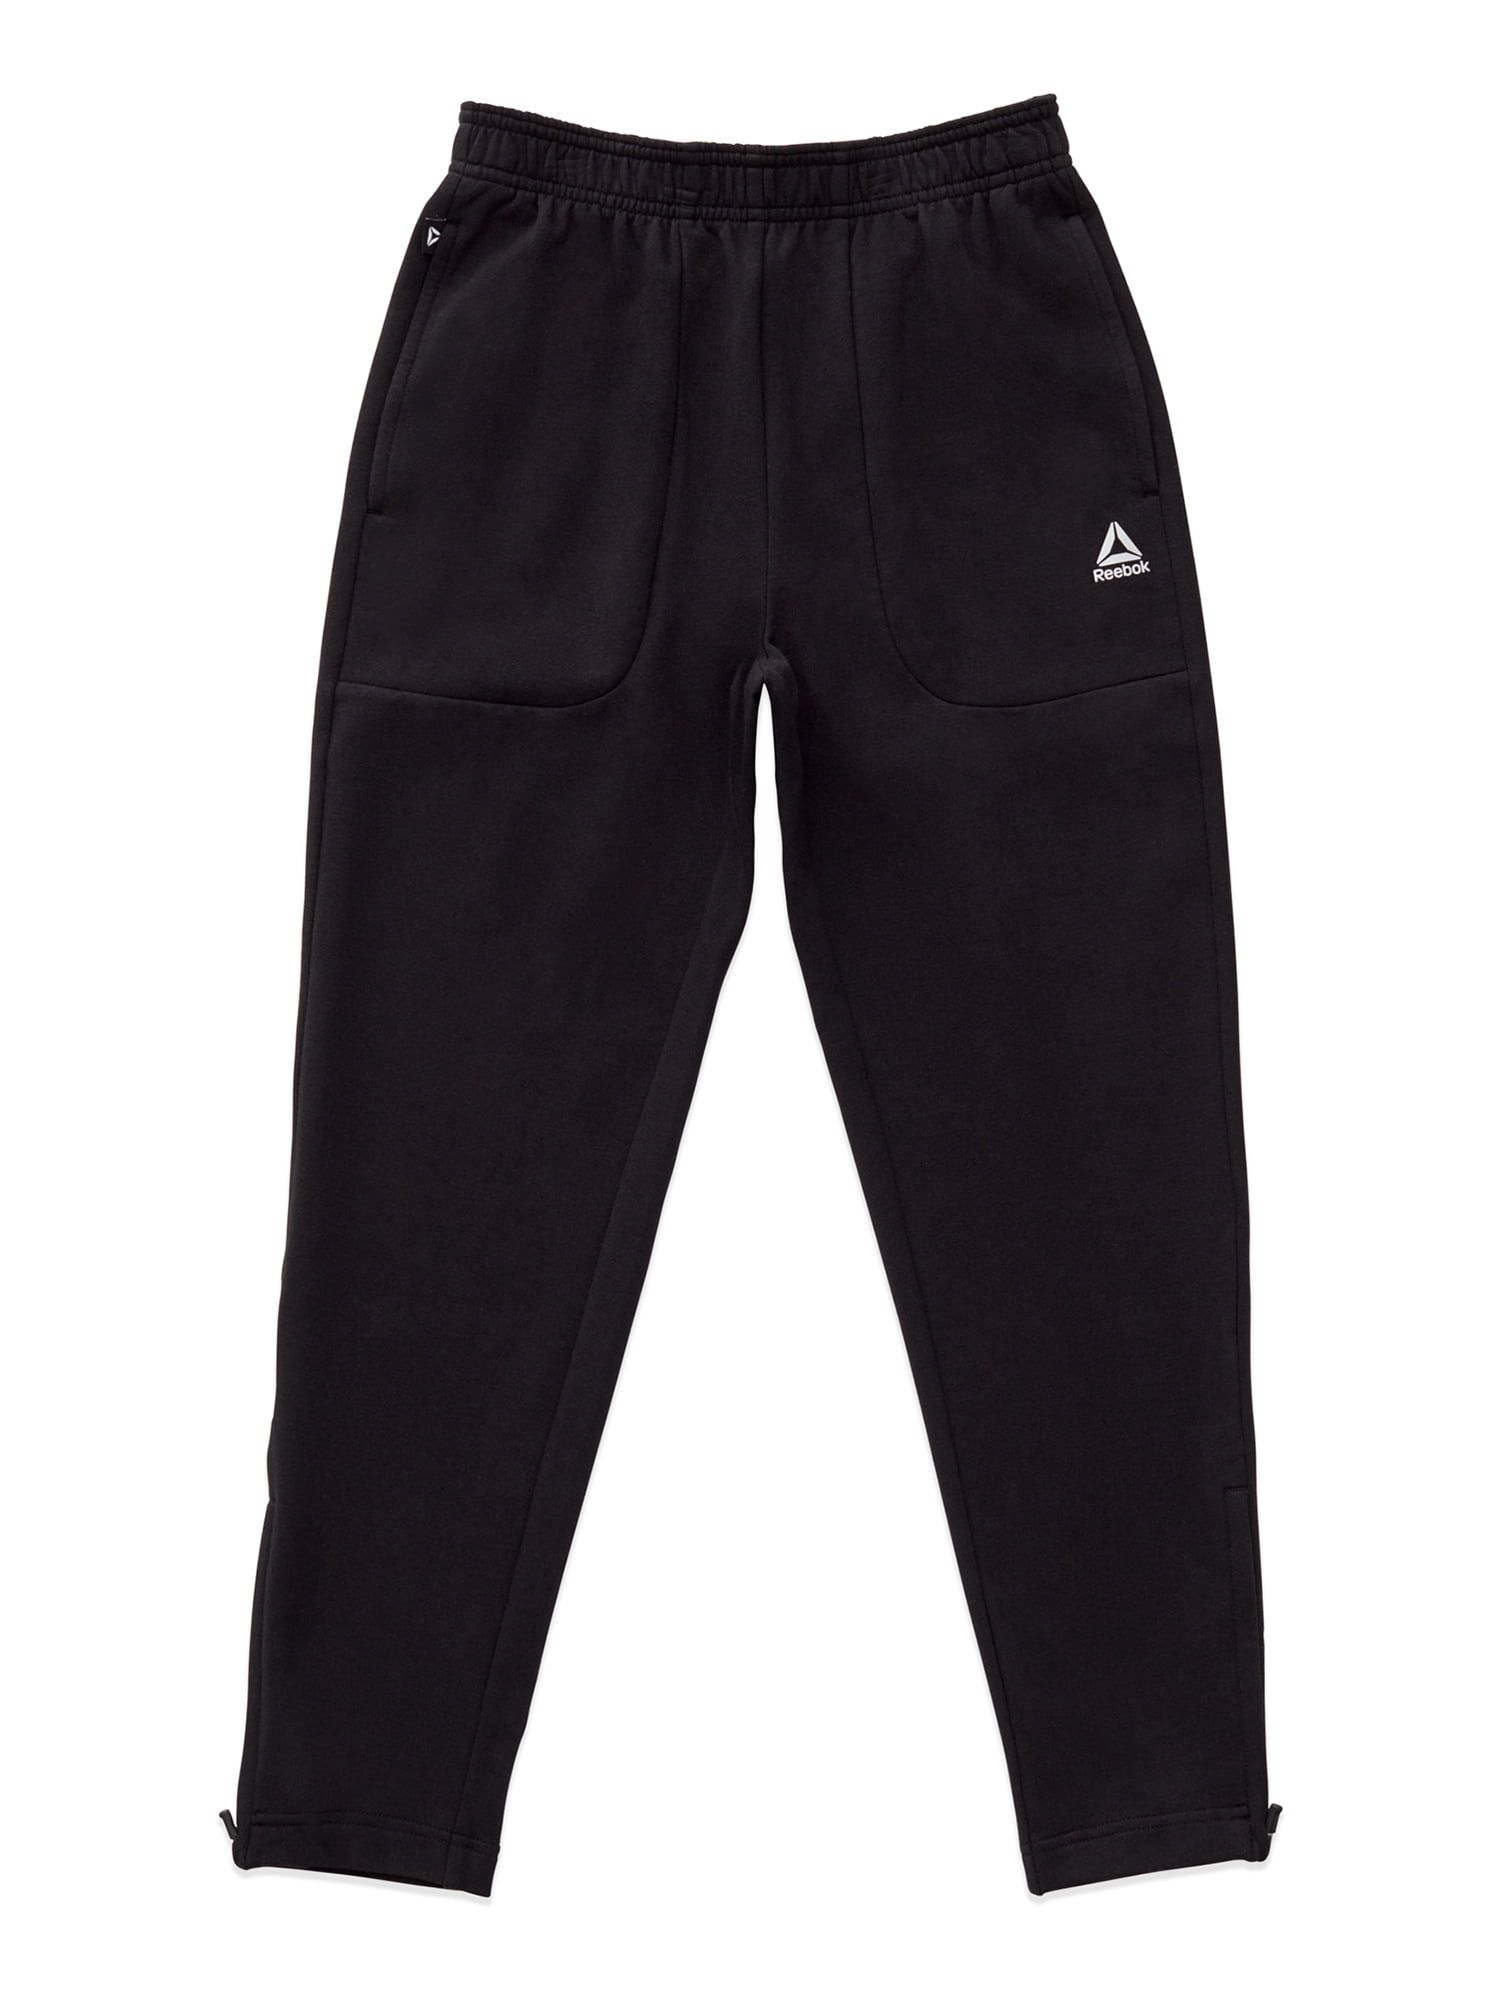 Athletic Works Boys Tricot Active Pant Size L 10-12  black/grey/orange   NWTag 